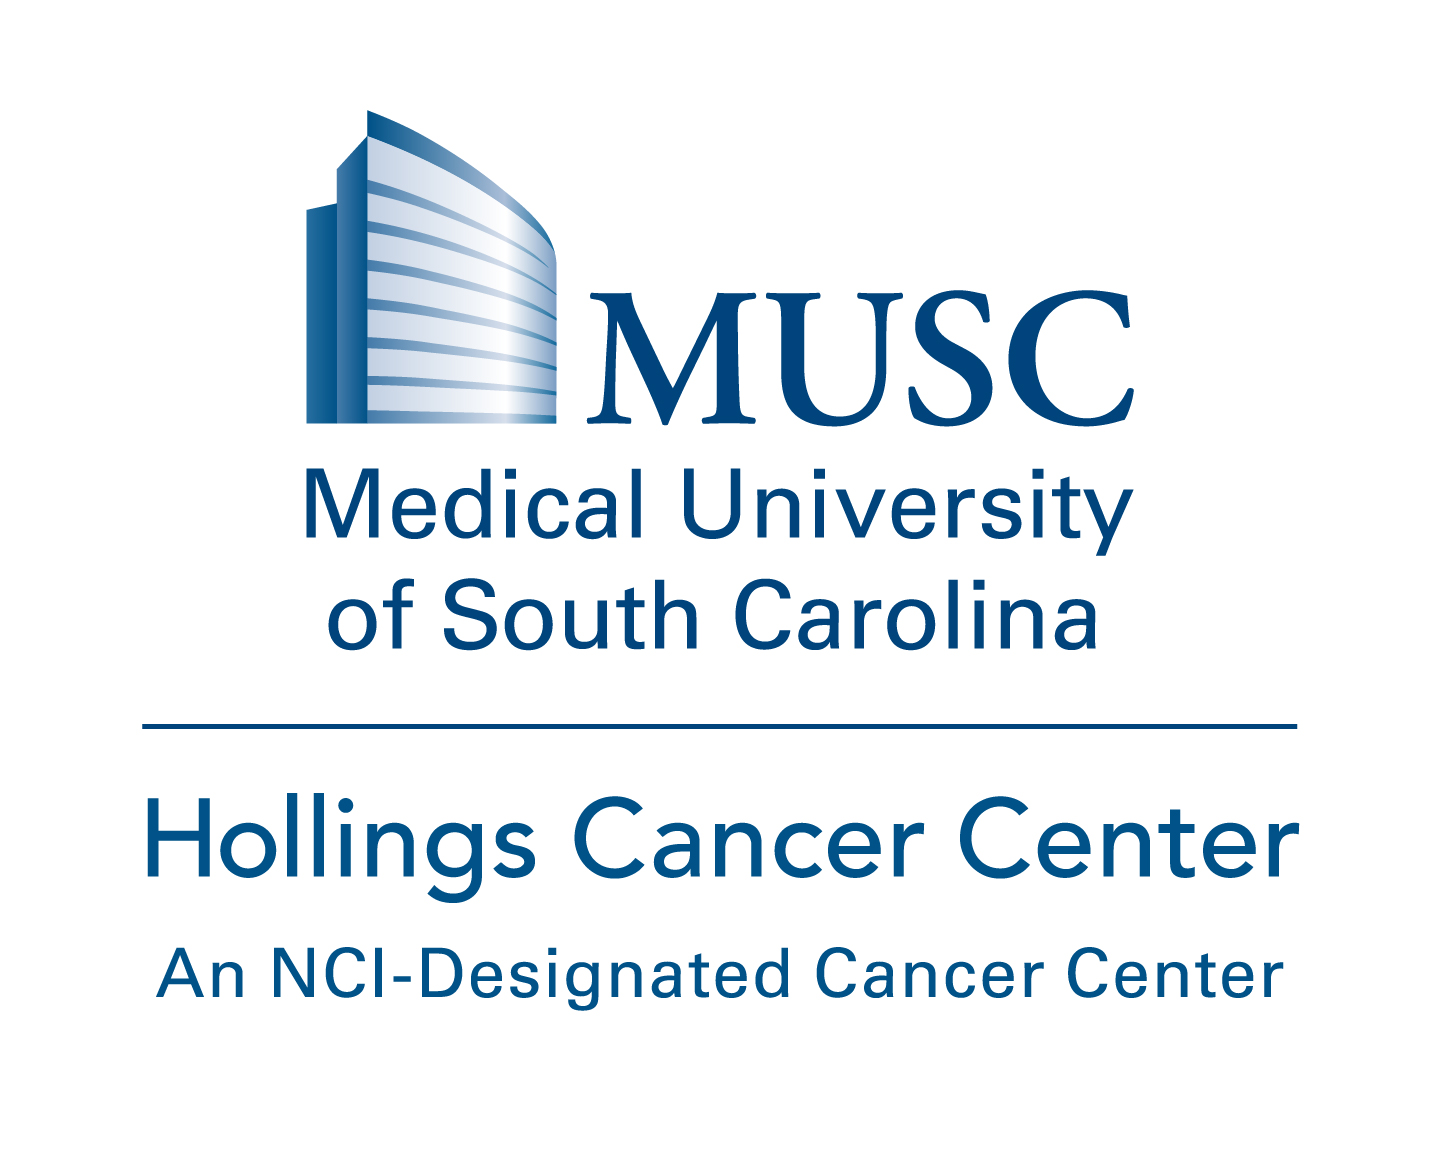 MUSC HCC Logo.jpg